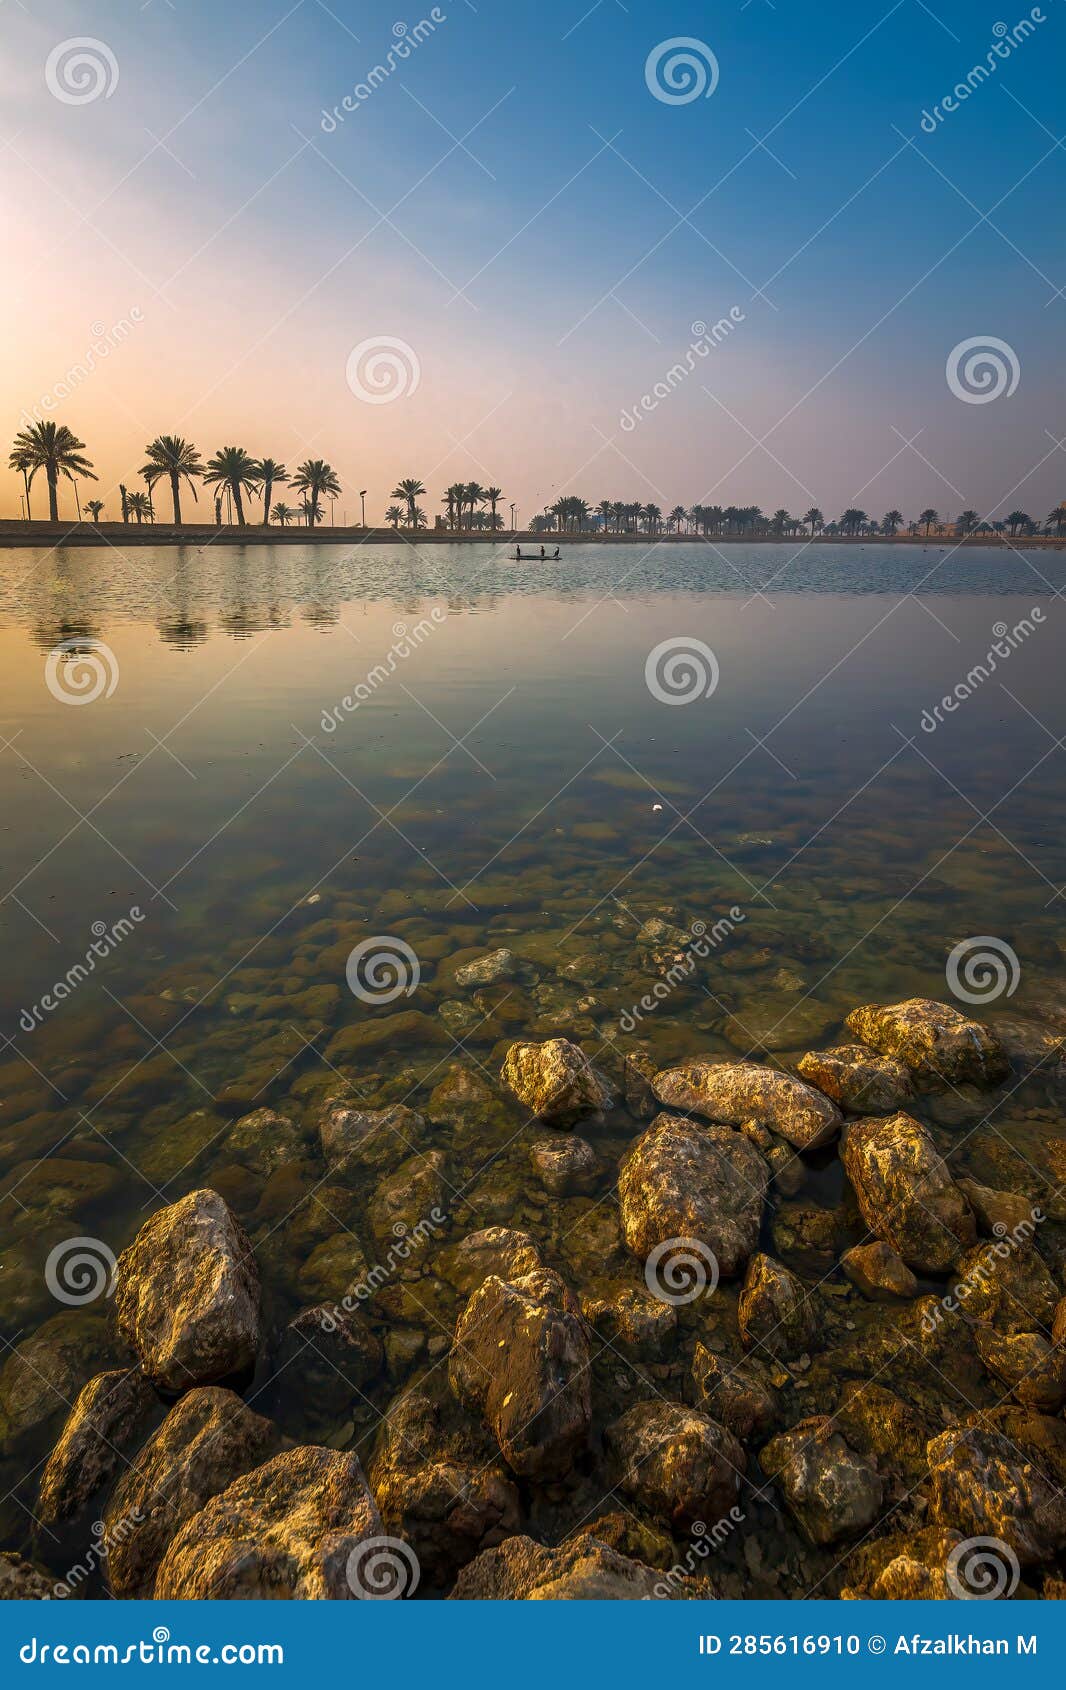 morning view before sunrise in modon lake dammam saudi arabia